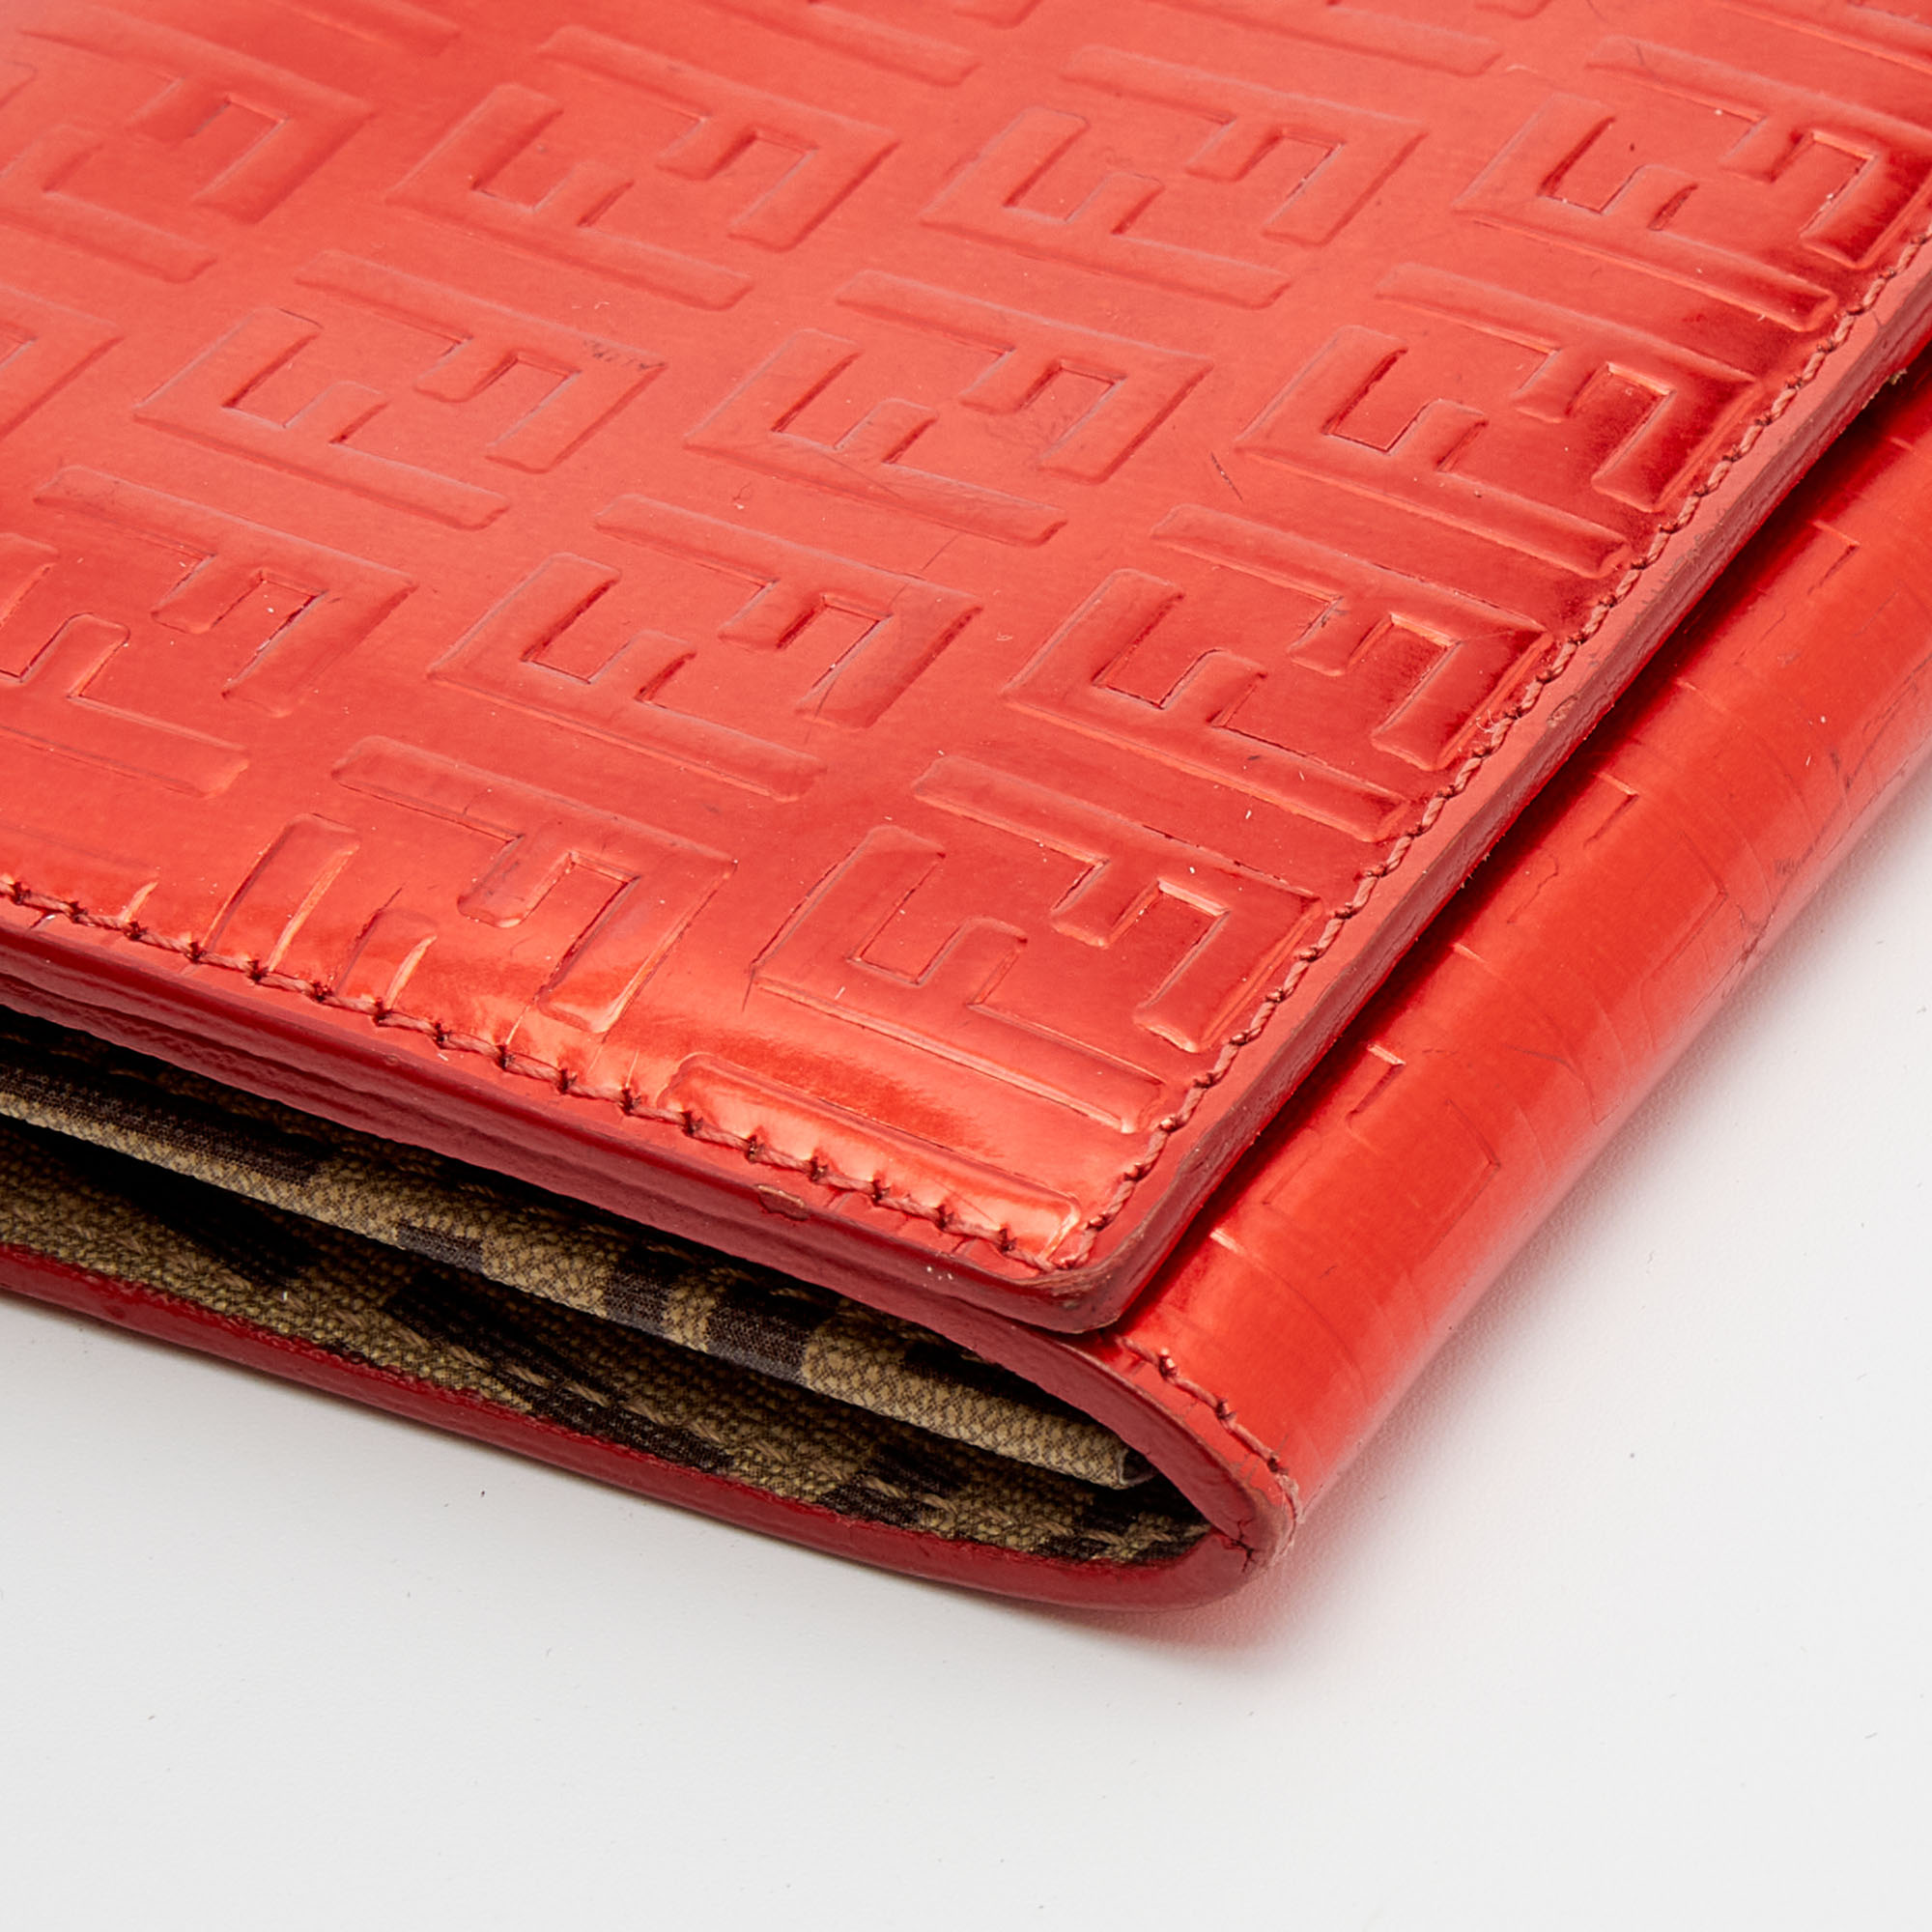 Fendi Red Zucchino Patent Leather Flap Wallet